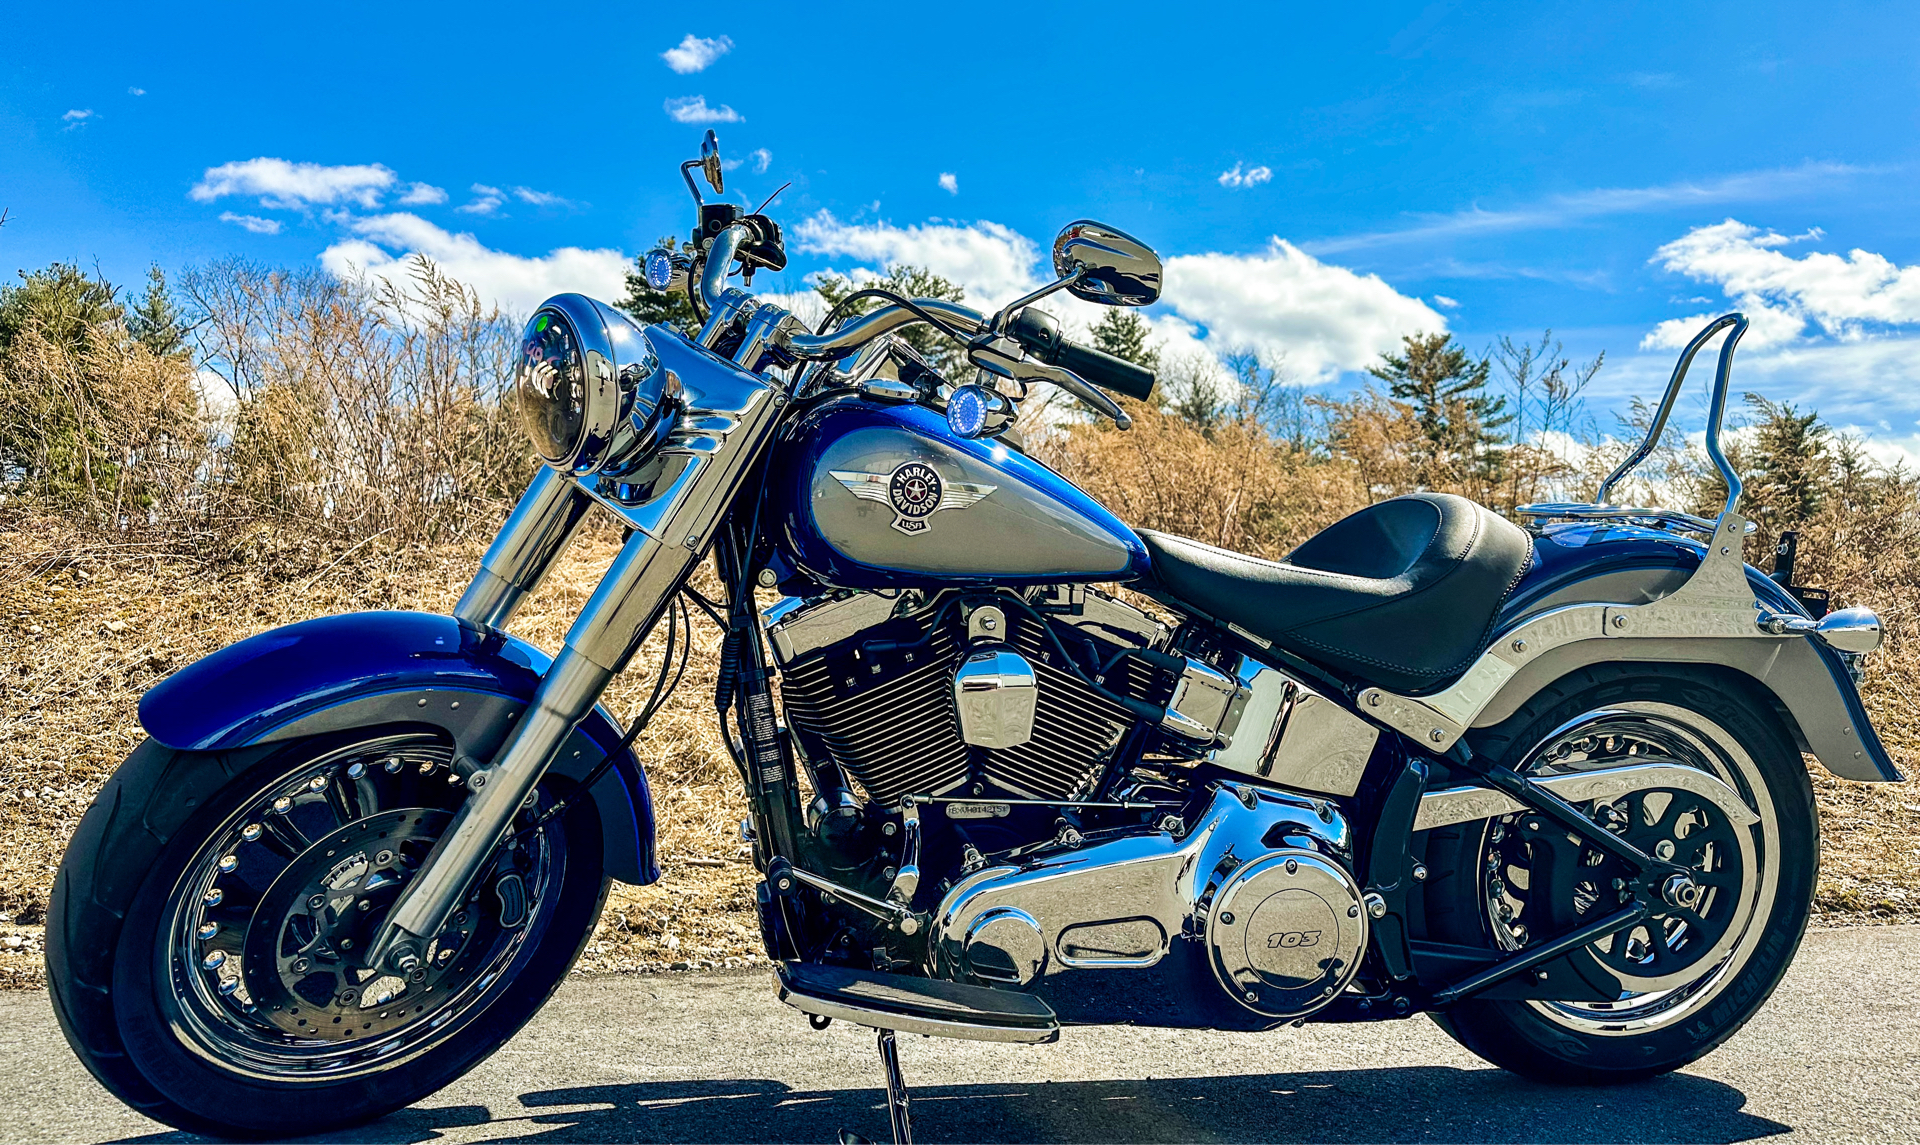 2017 Harley-Davidson Fat Boy® in Foxboro, Massachusetts - Photo 25